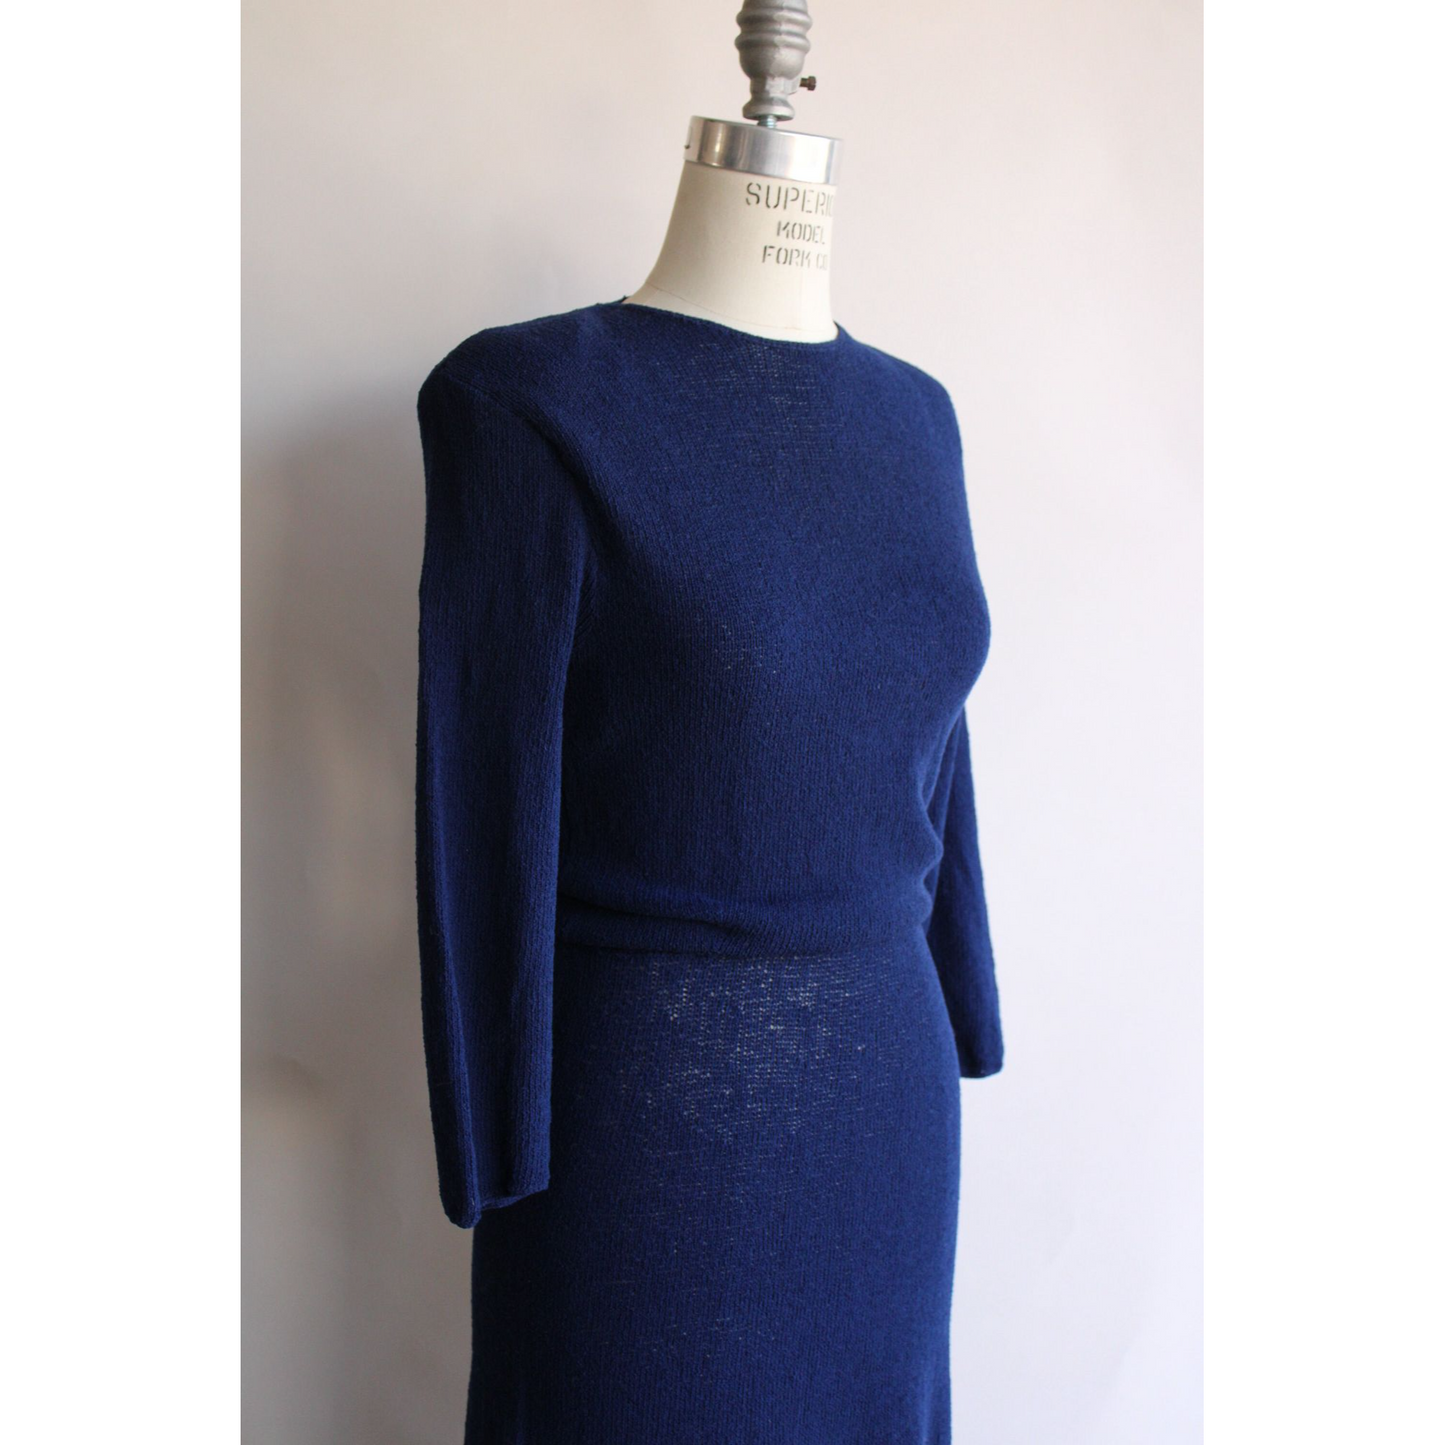 Vintage 1940s Navy Blue Sweater Dress with Shoulder Pads